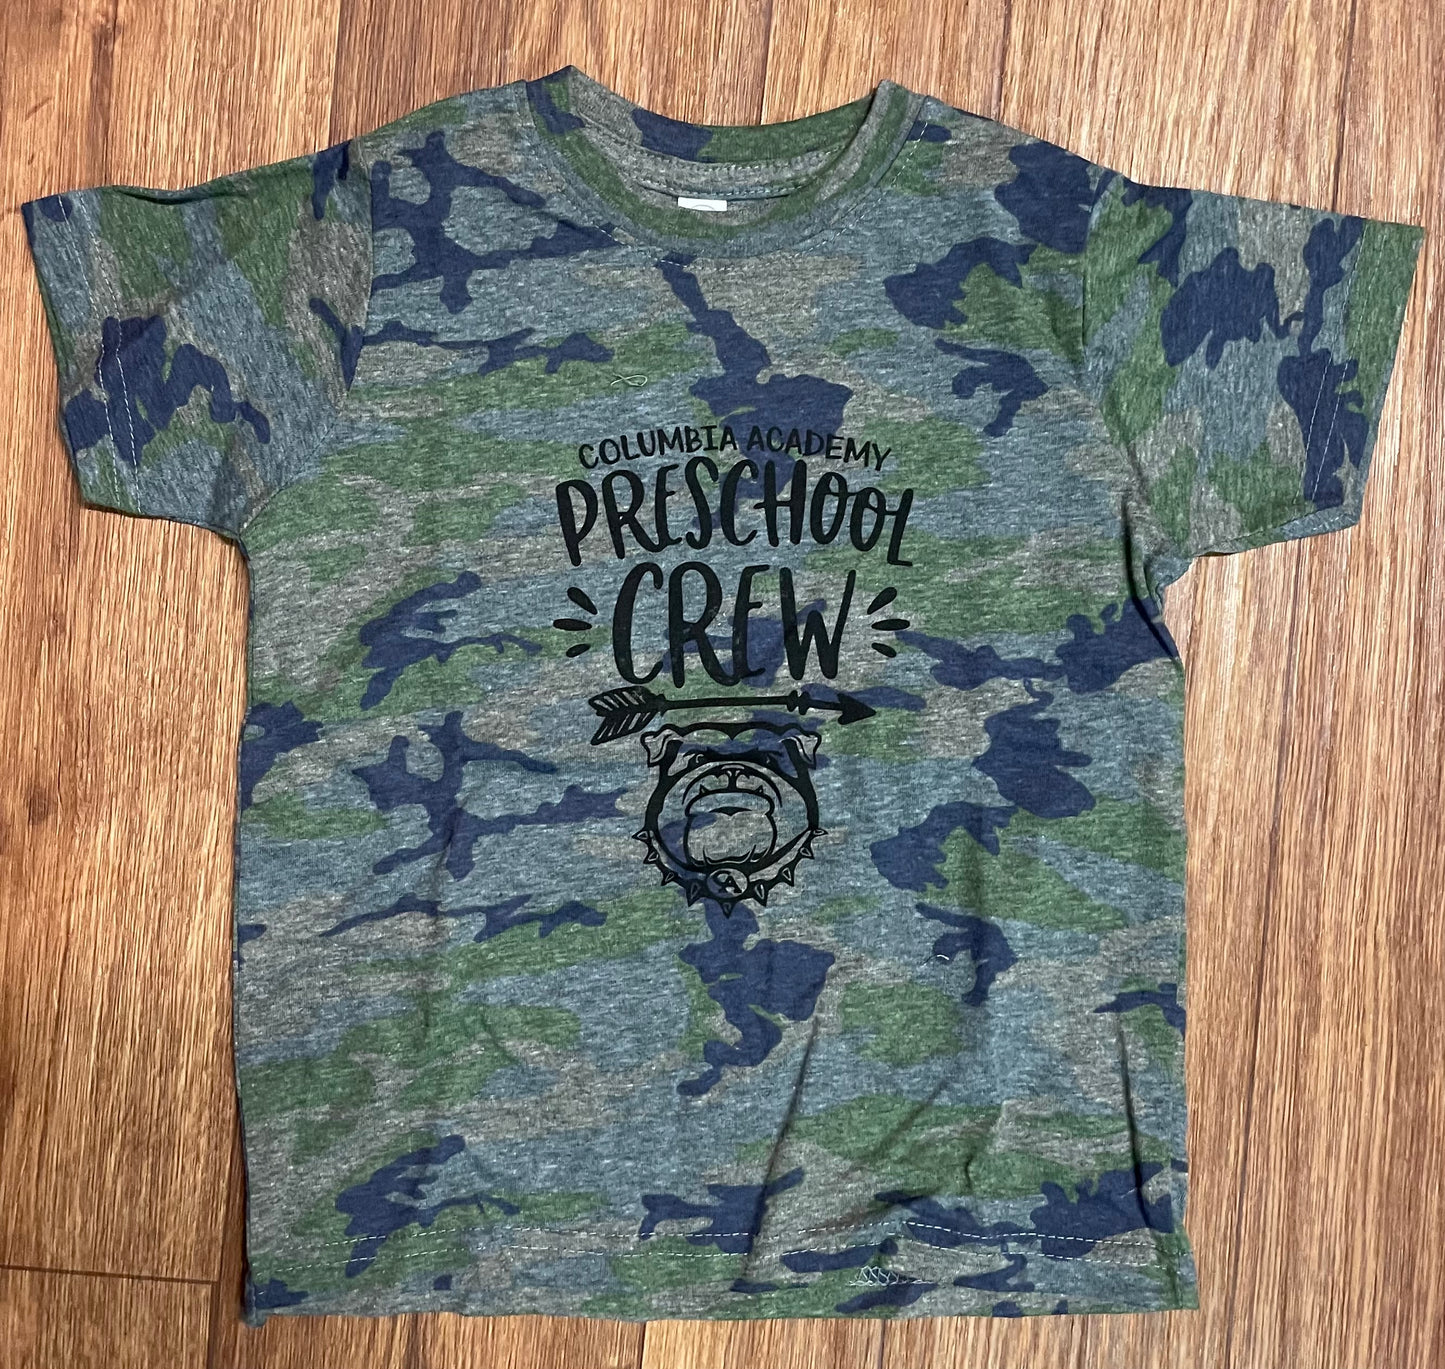 Pre-School Crew T-shirt - #1615